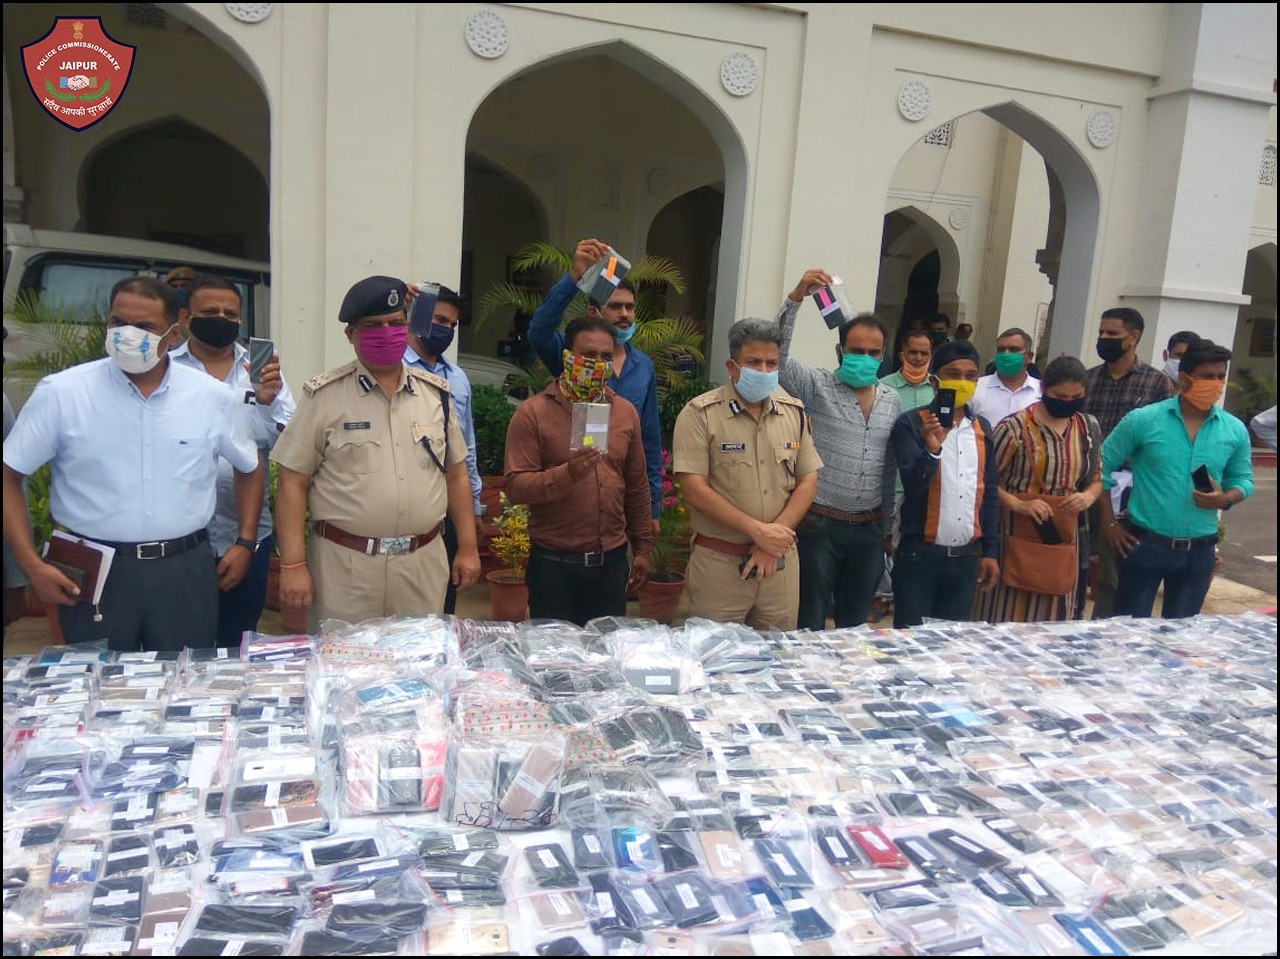 jaipur-police-found-2200-stolen-mobile-phones-amid-coronavirus-crisis